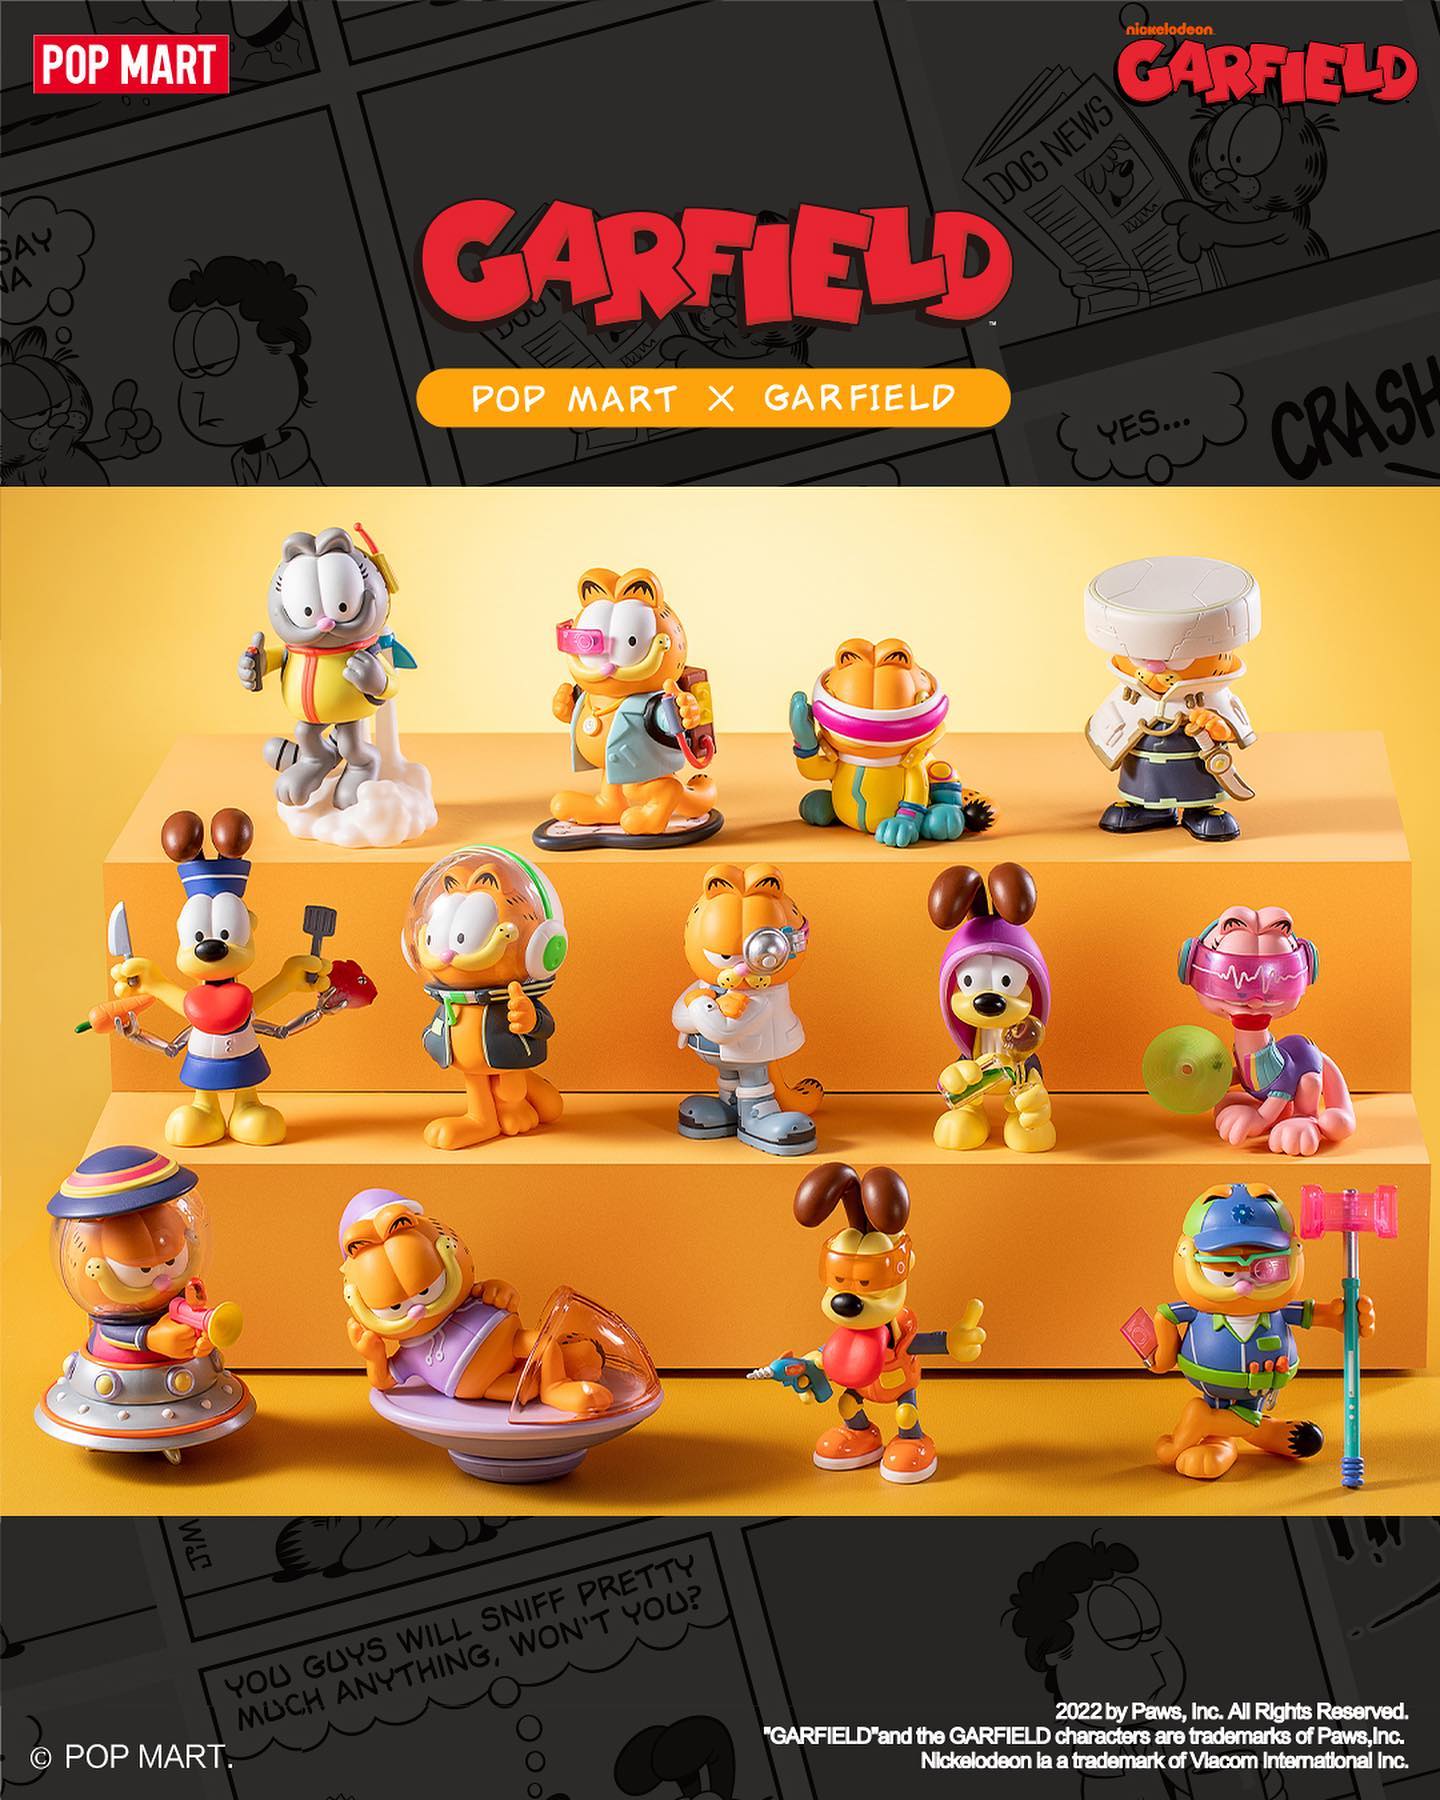 Garfield Future Fantasy Blind Box Series from Pop Mart